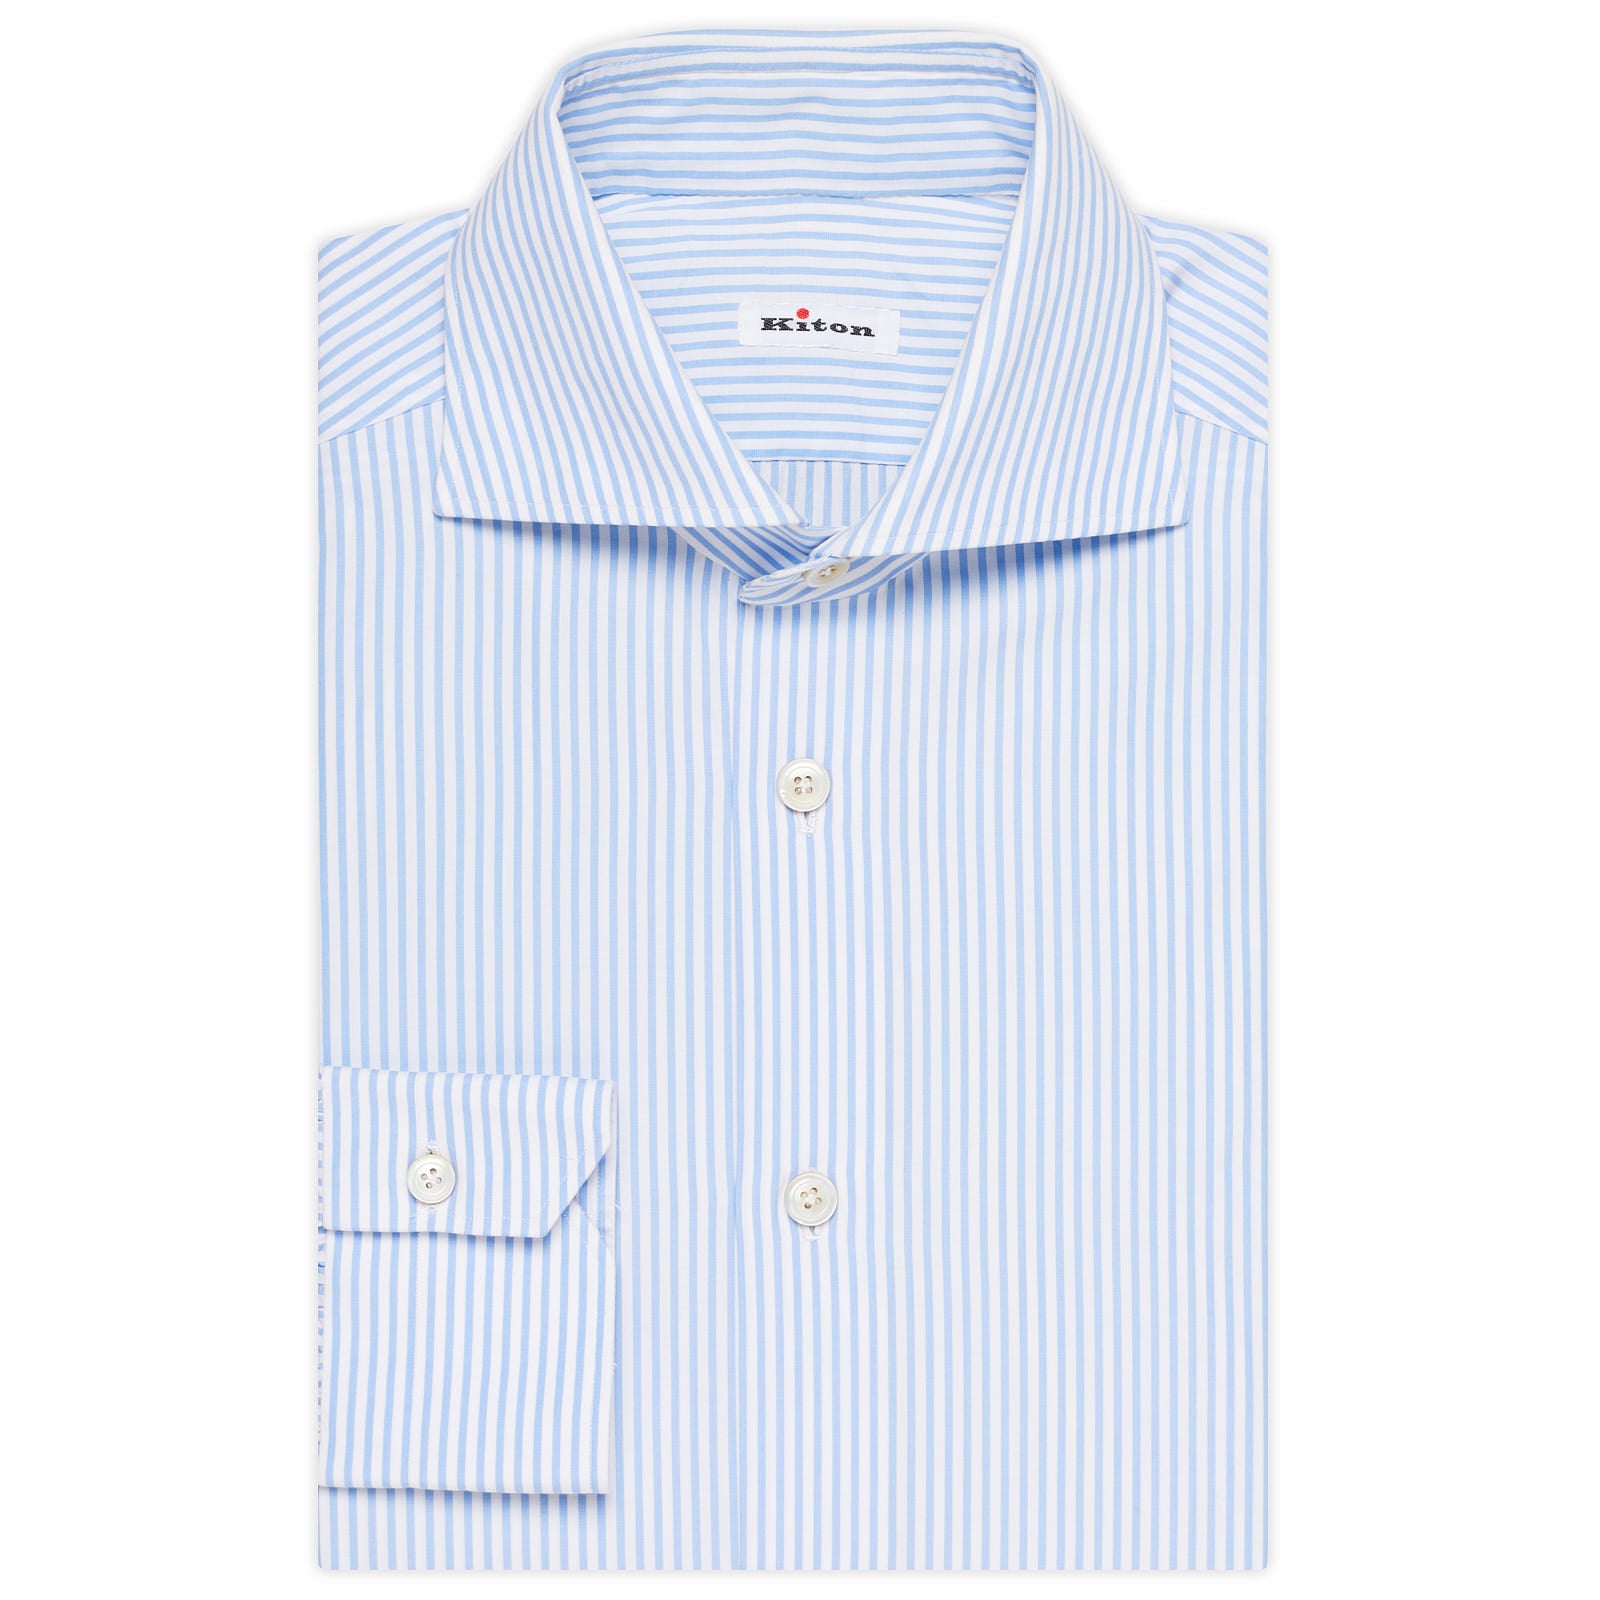 KITON Napoli Handmade Blue Striped Poplin Cotton Dress Shirt EU 39 US 15.5 NEW KITON